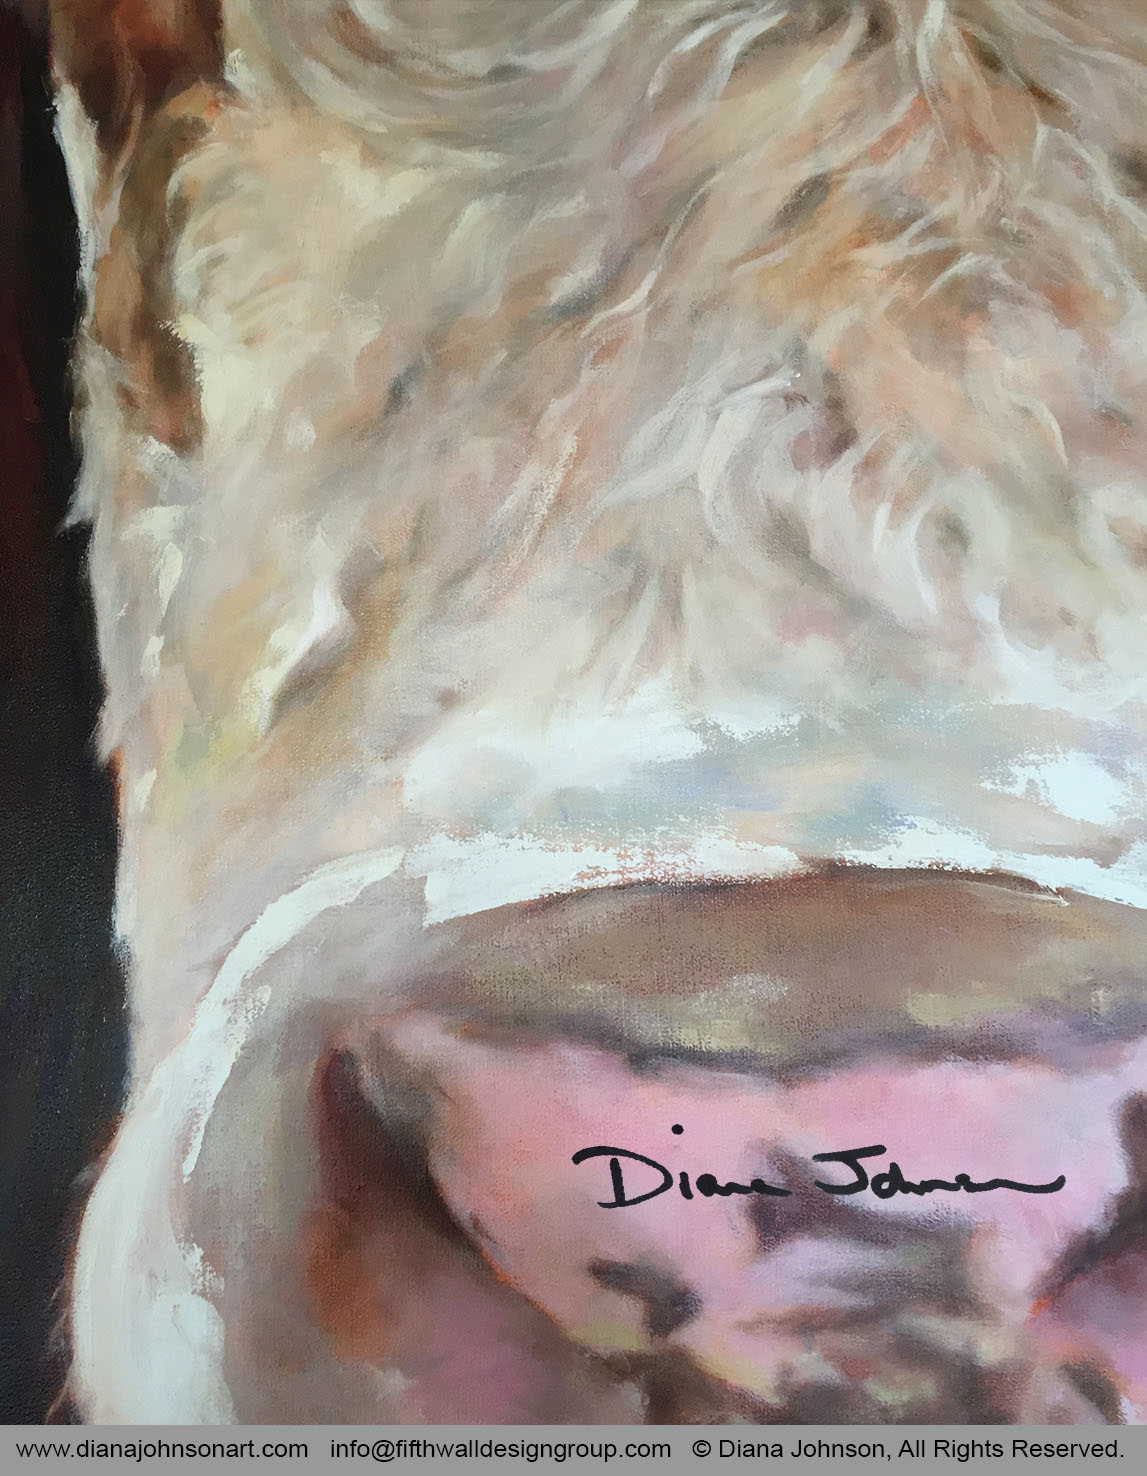 Amanda the Cow, detail. By Diana Johnson